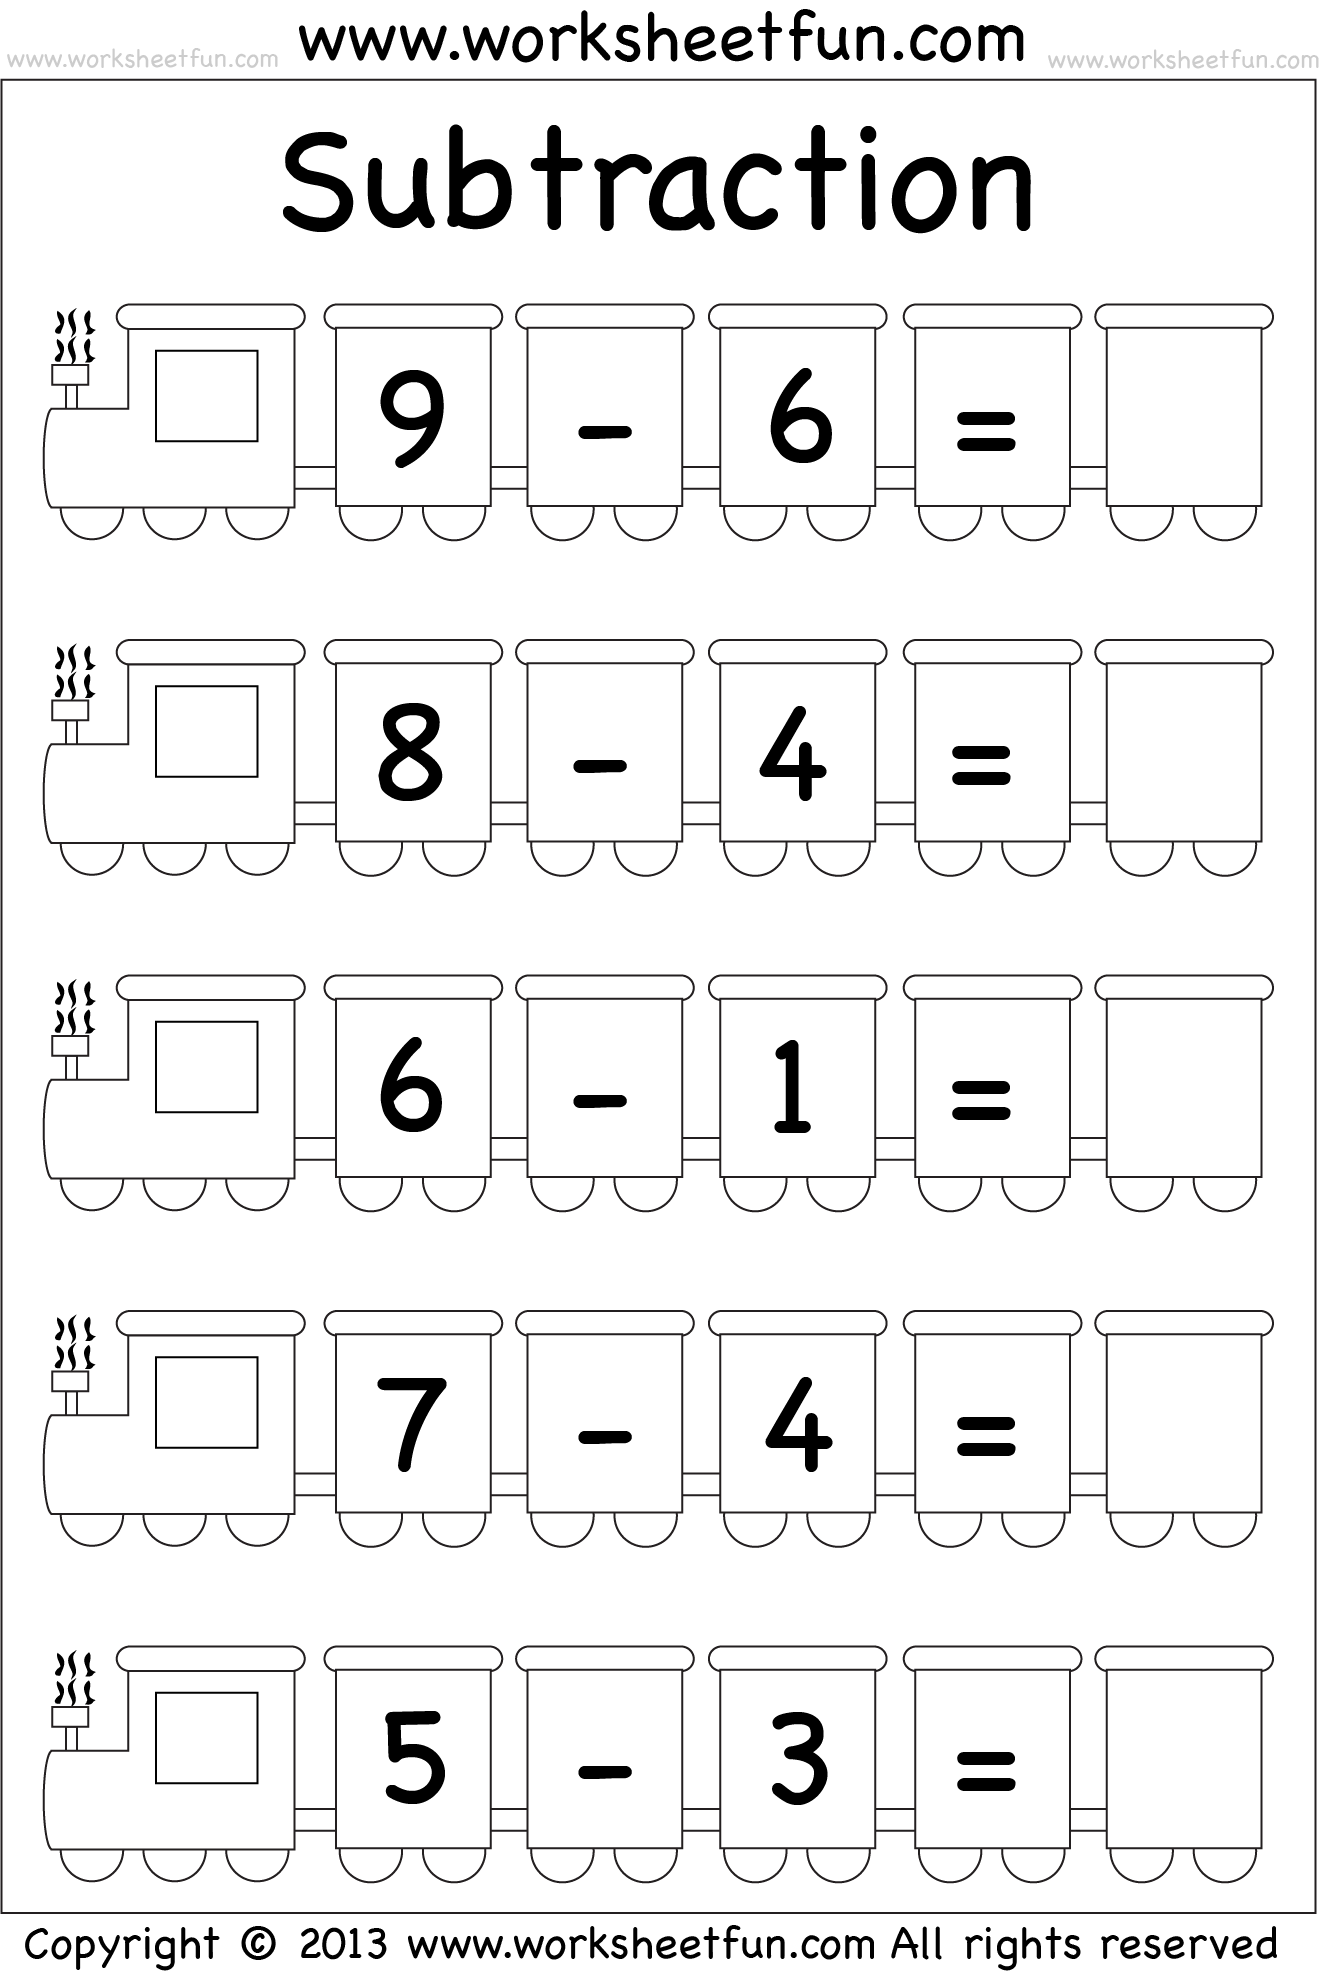 subtraction-within-10-five-worksheets-free-printable-worksheets-worksheetfun